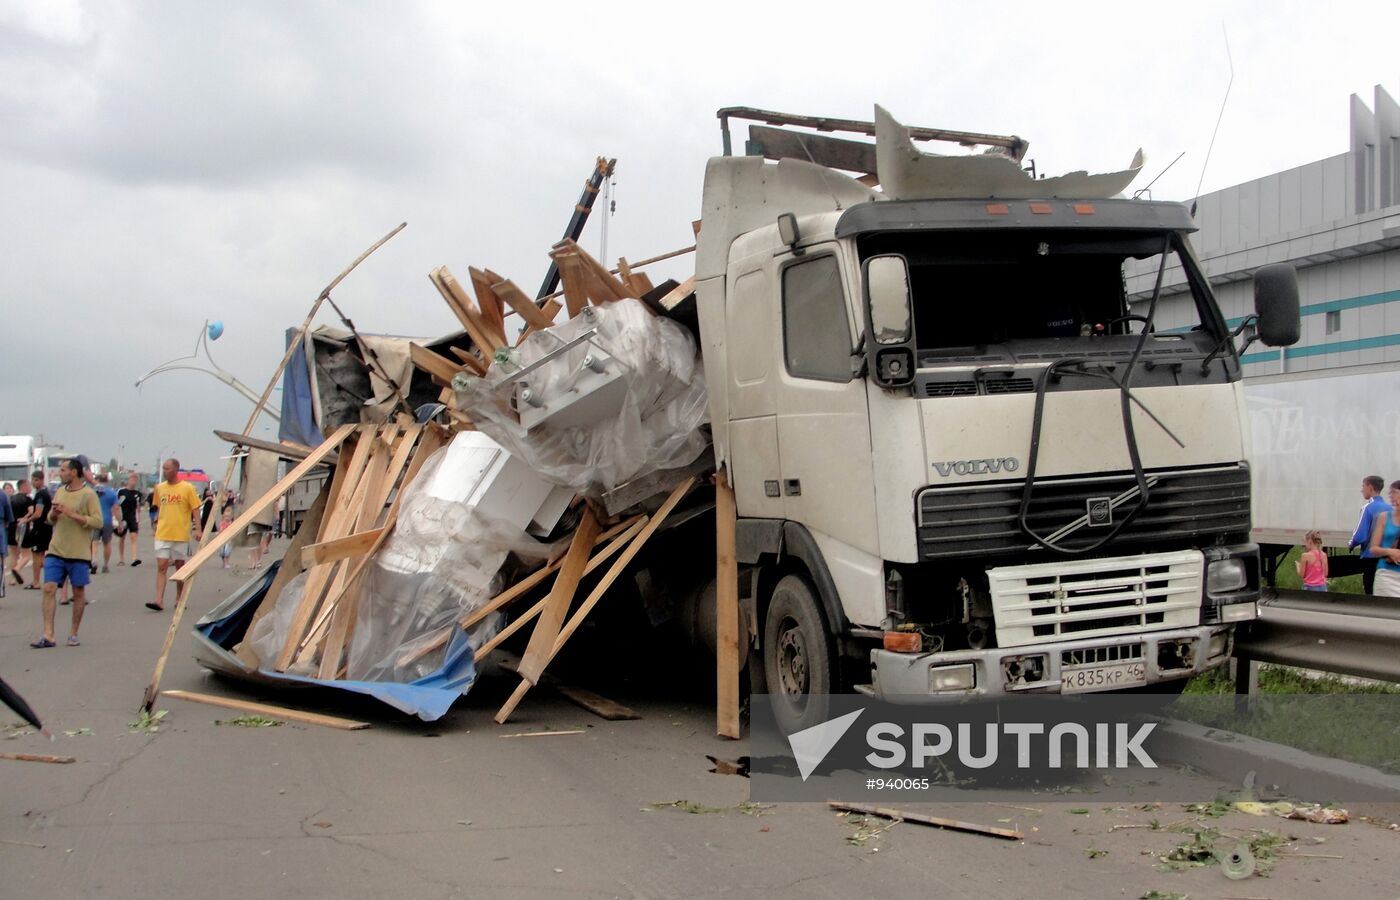 Tornado aftermath in Blagoveshchensk